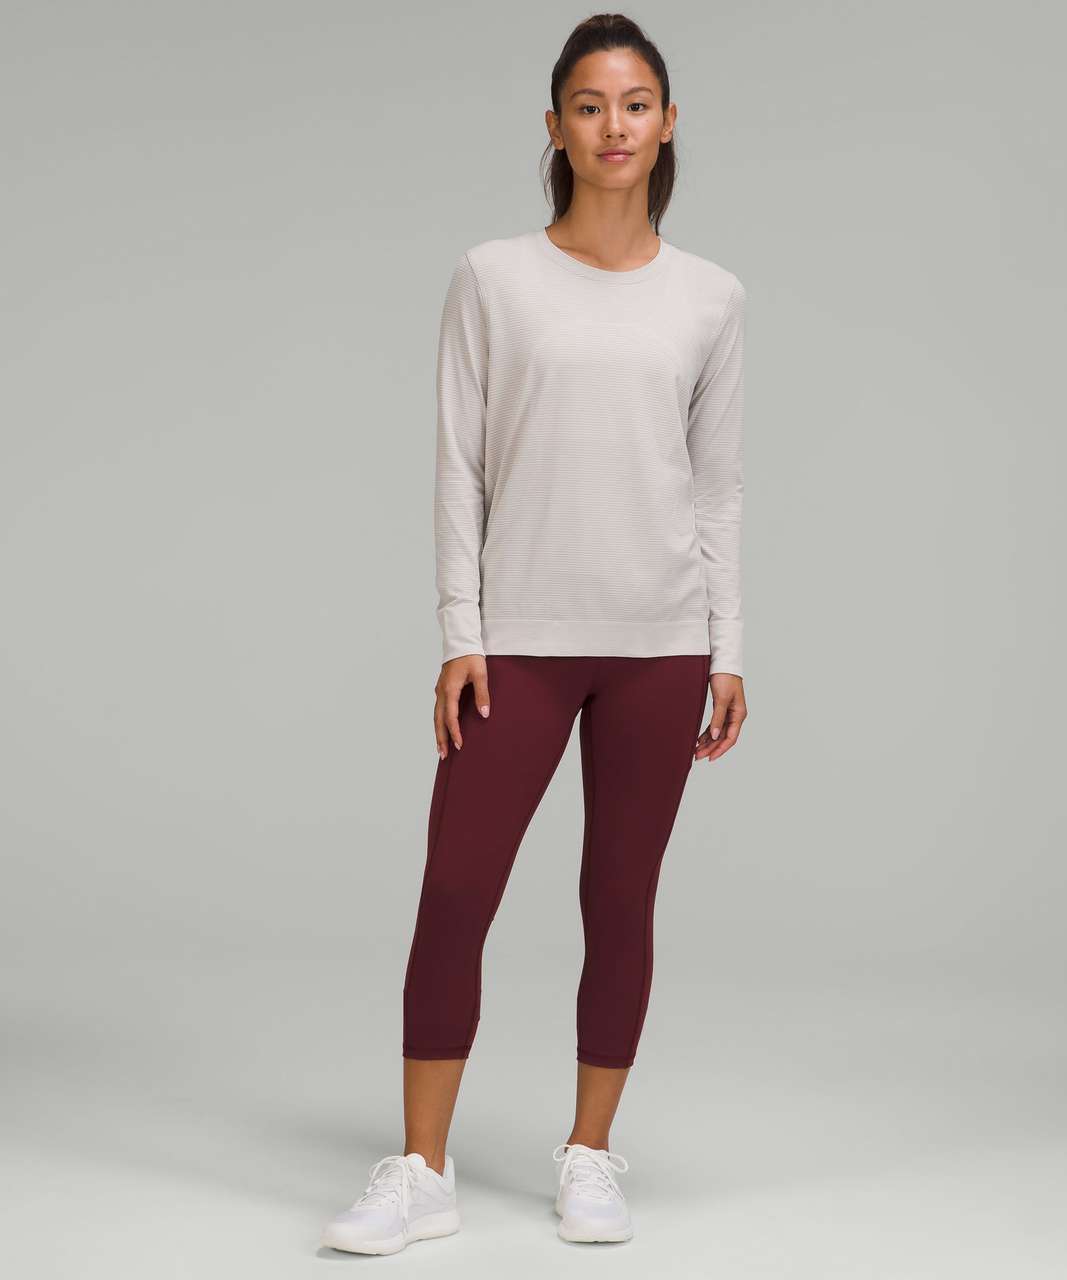 Lululemon Swiftly Relaxed-Fit Long Sleeve Shirt - Tempo Stripe Chrome / White